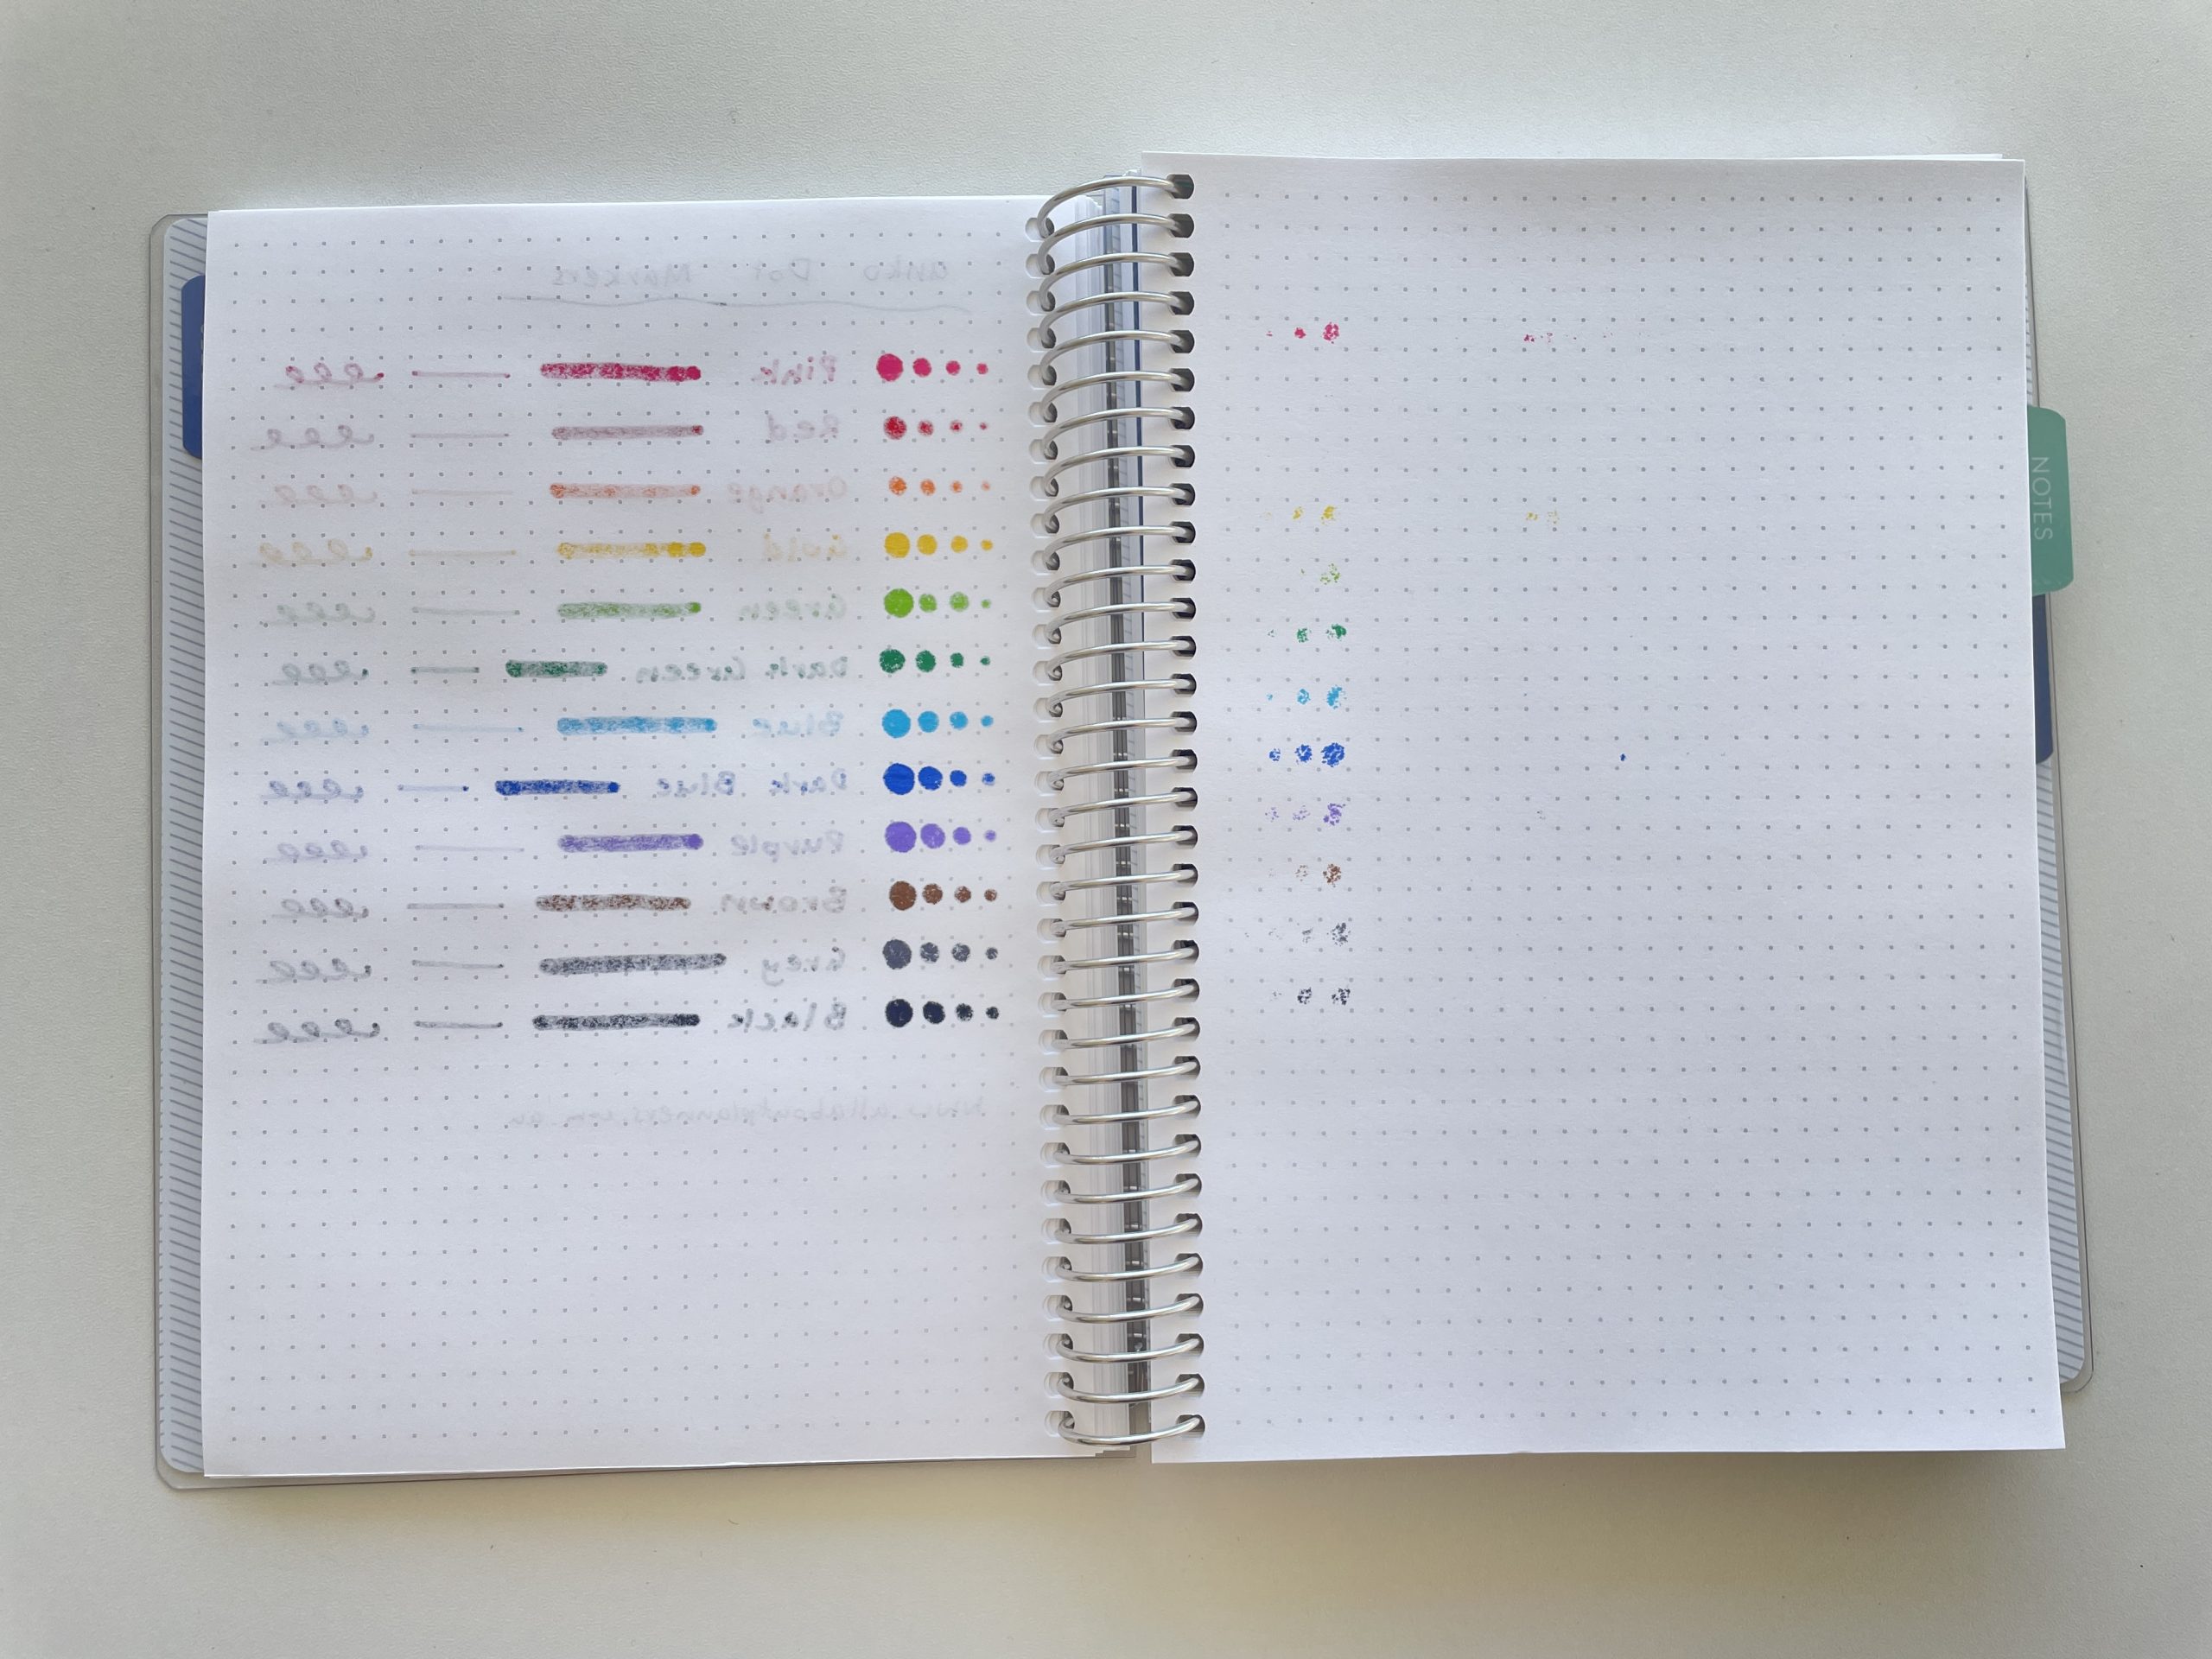 kmart anko dot markers pen testing ghosting bleed through rainbow plum paper bullet journal notebook